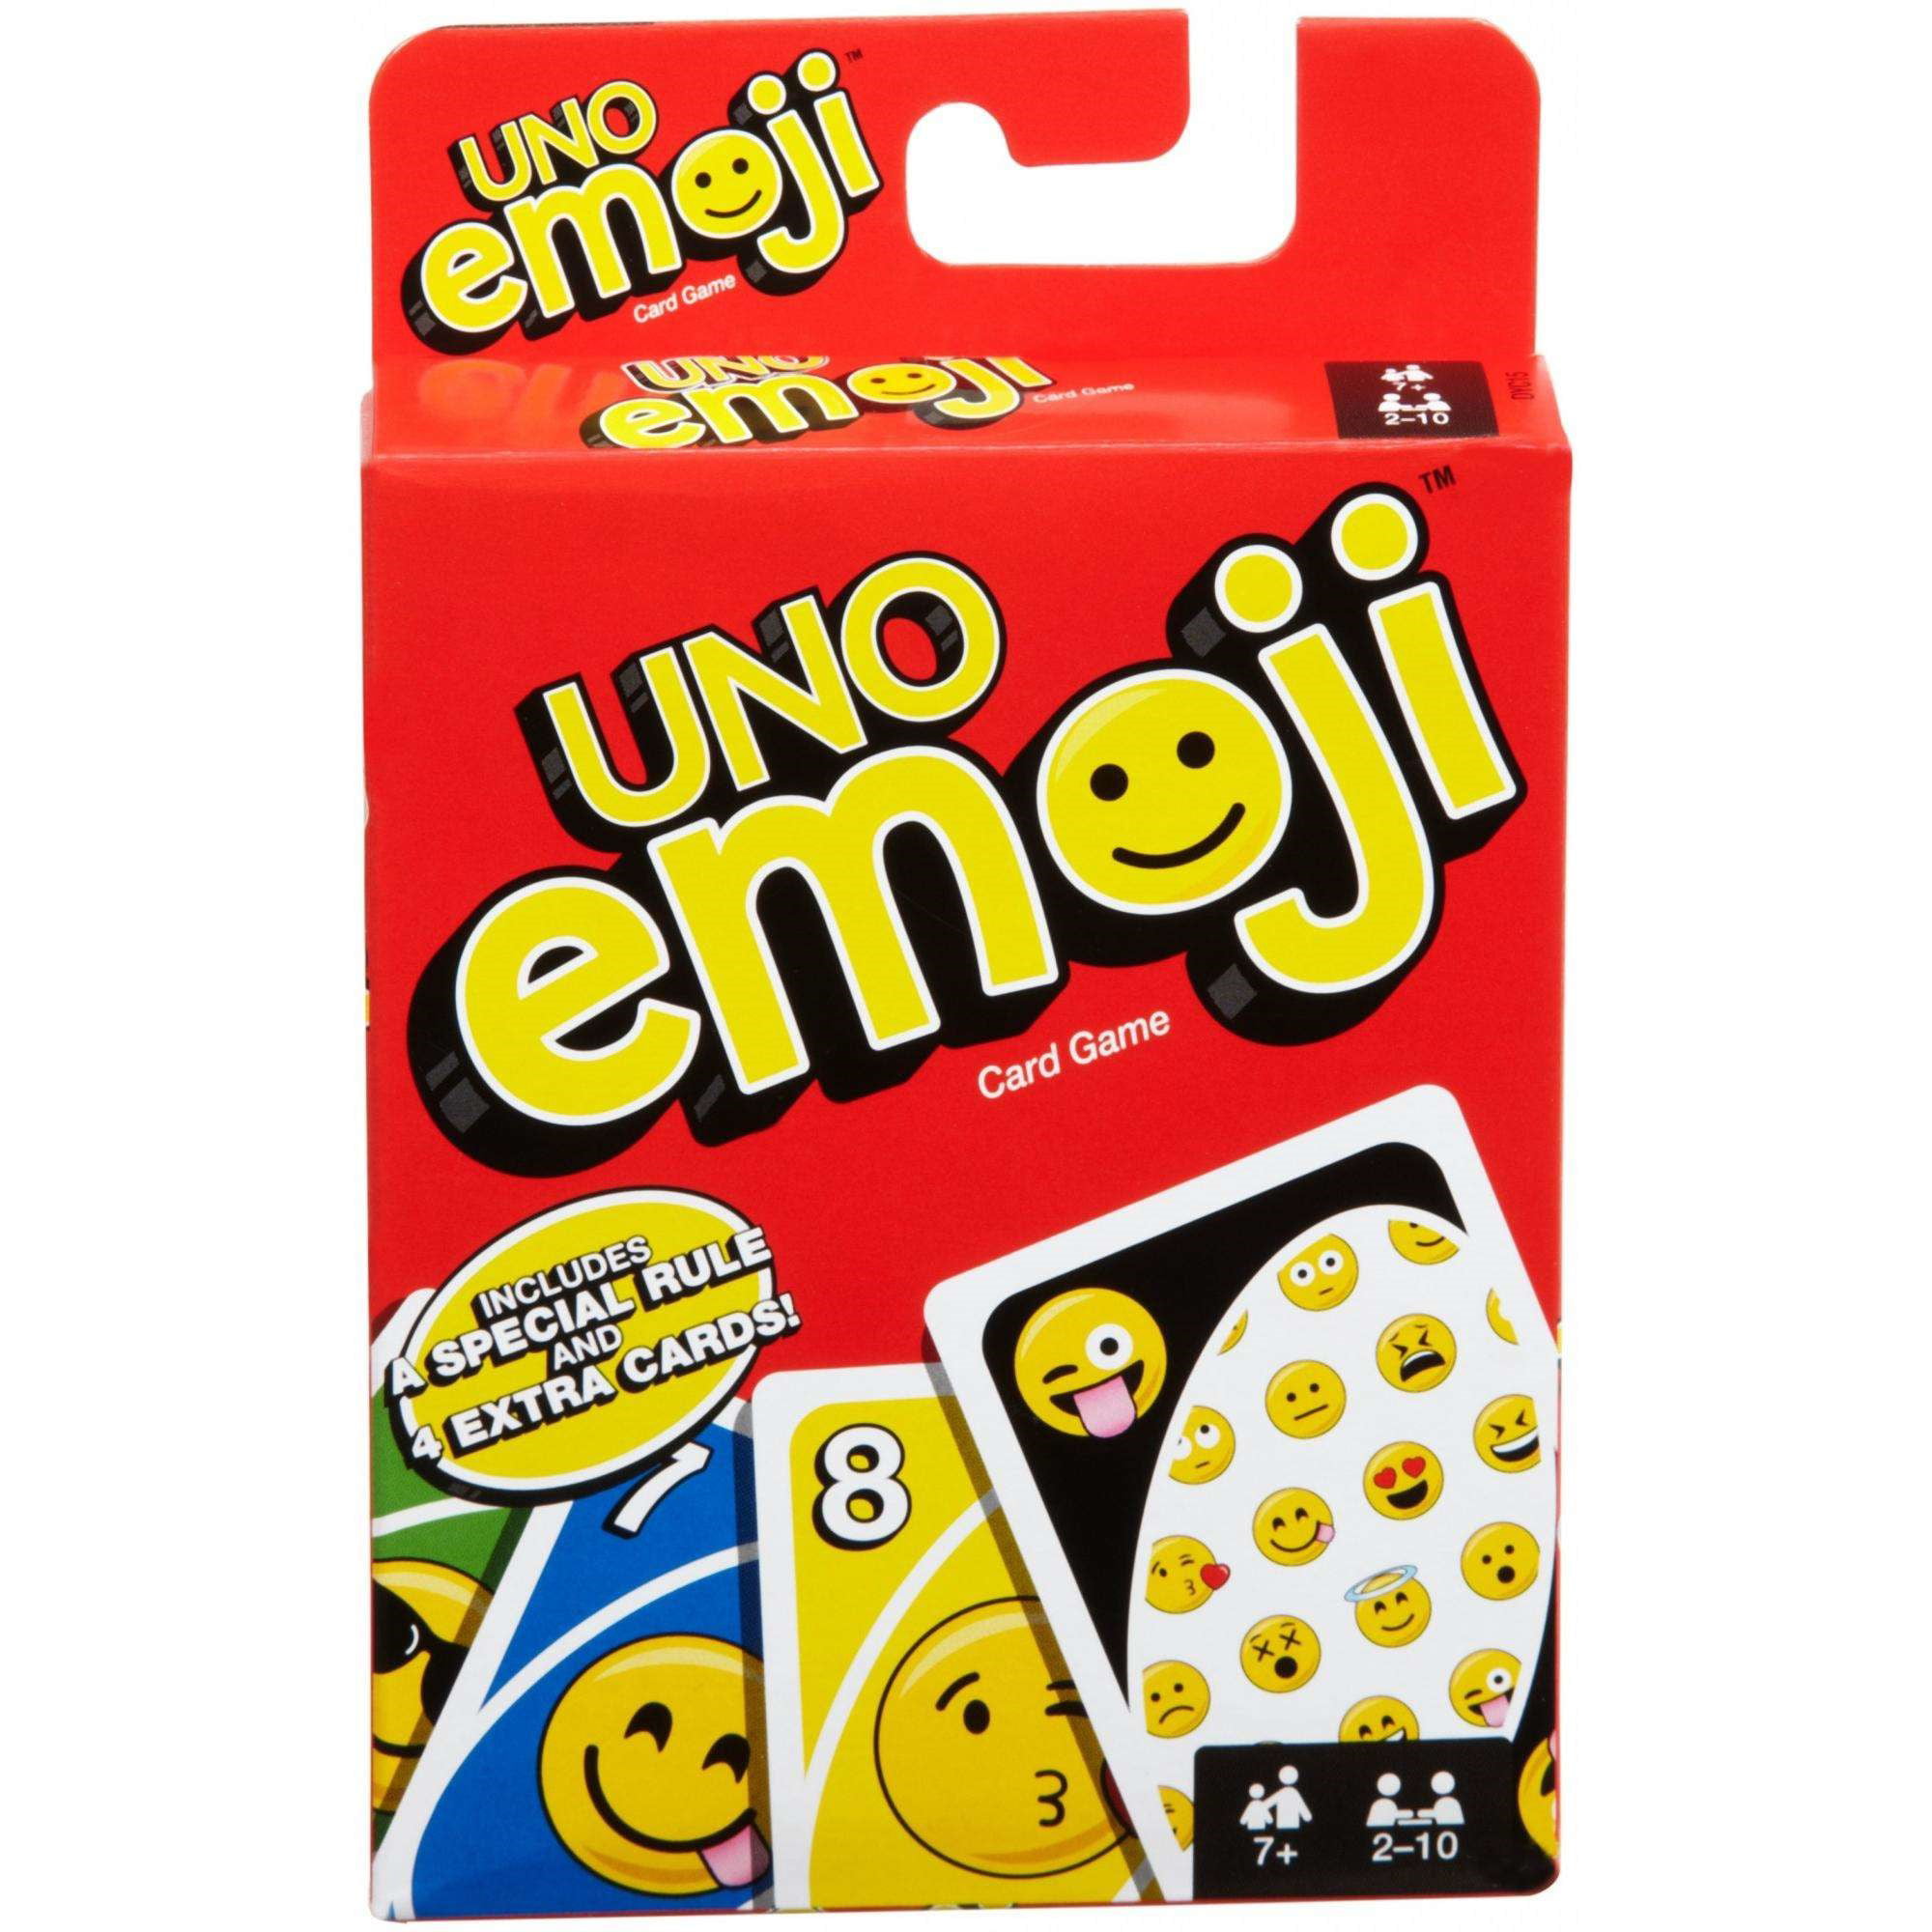 Uno Emoji Card Game New Uno card GameWith Emoji Theme We Love Emojis  new game